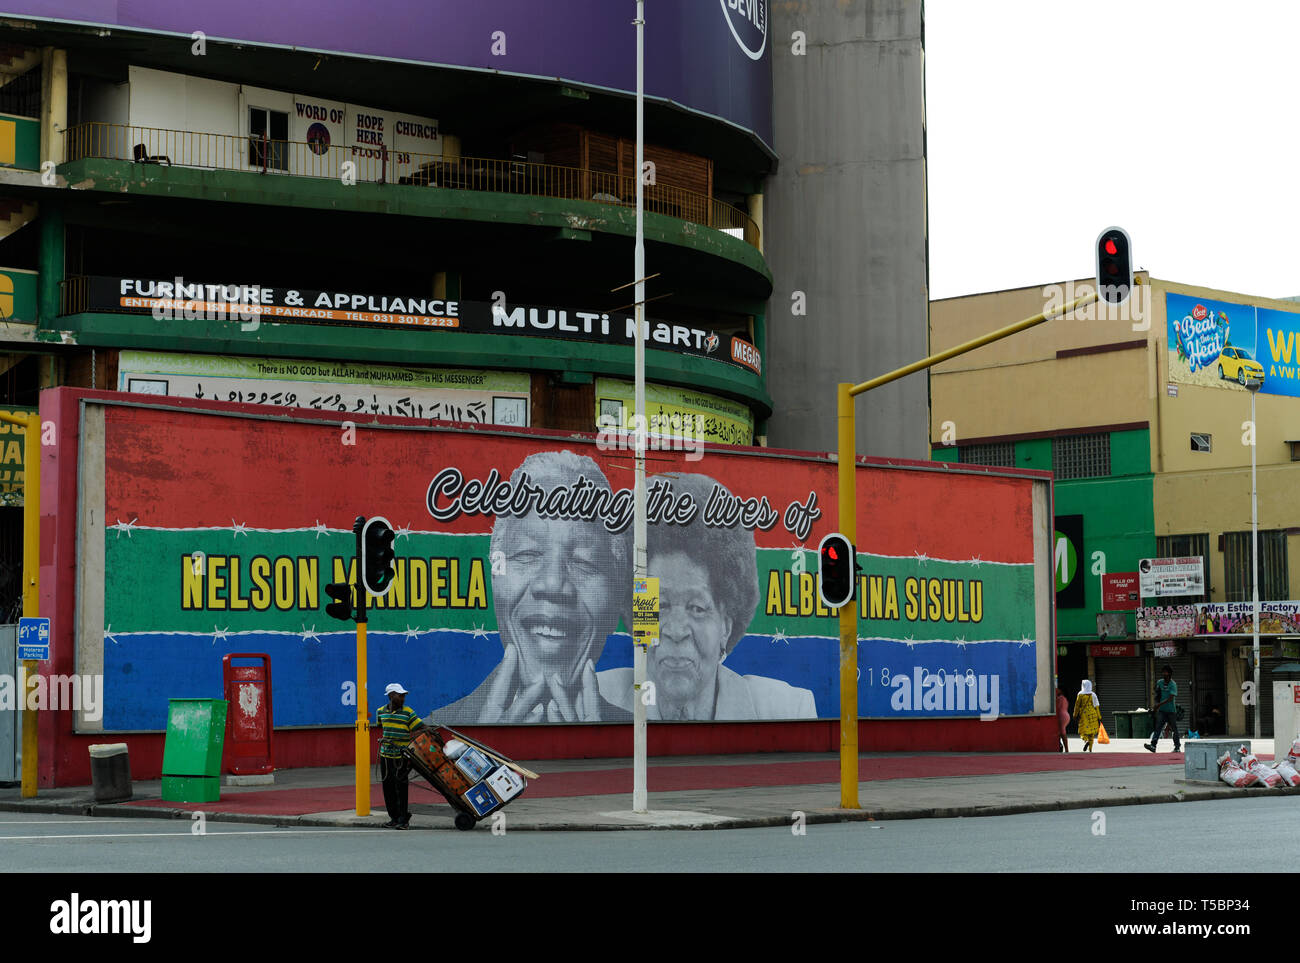 Durban, KwaZulu-Natal, South Africa, street vendor with trolley standing at traffic light next to billboard, 100 years Nelson Mandela celebration Stock Photo